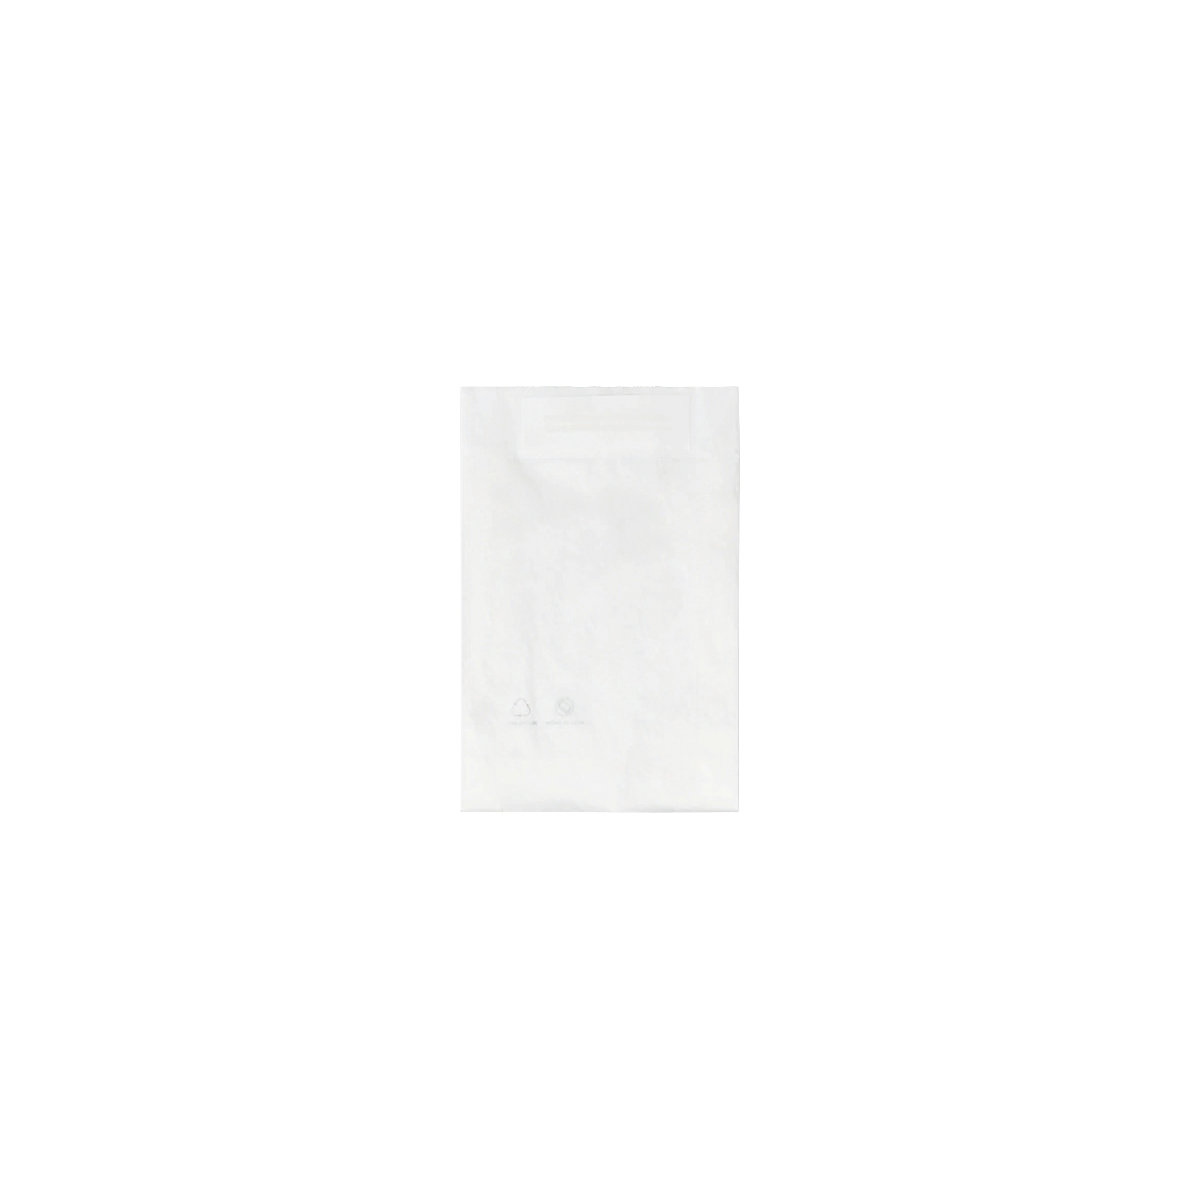 Sacchetti piatti con strisce adesive – terra, in carta pergamina, lungh. x largh. 200 x 150 mm, conf. da 250 pz.-1